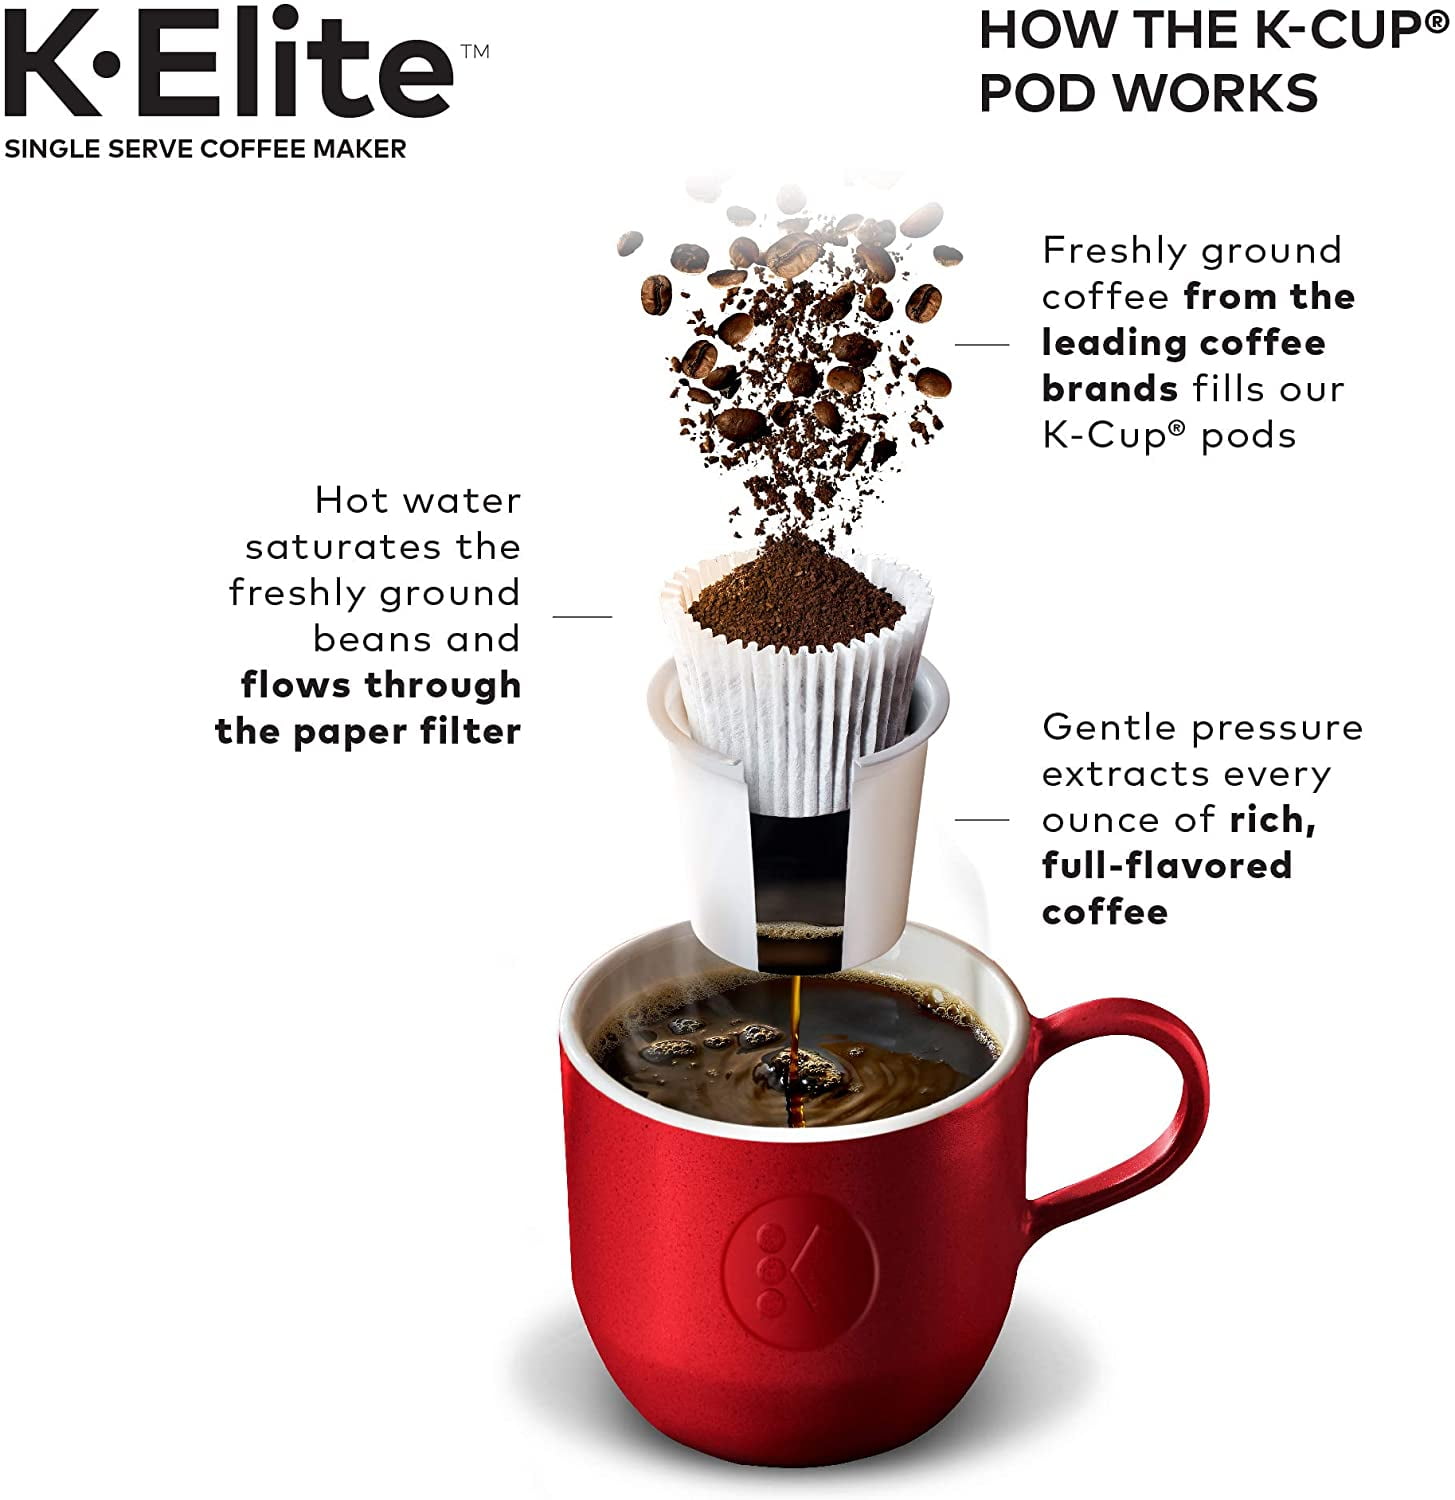 Keurig K-Elite Coffee Maker $124 Shipped